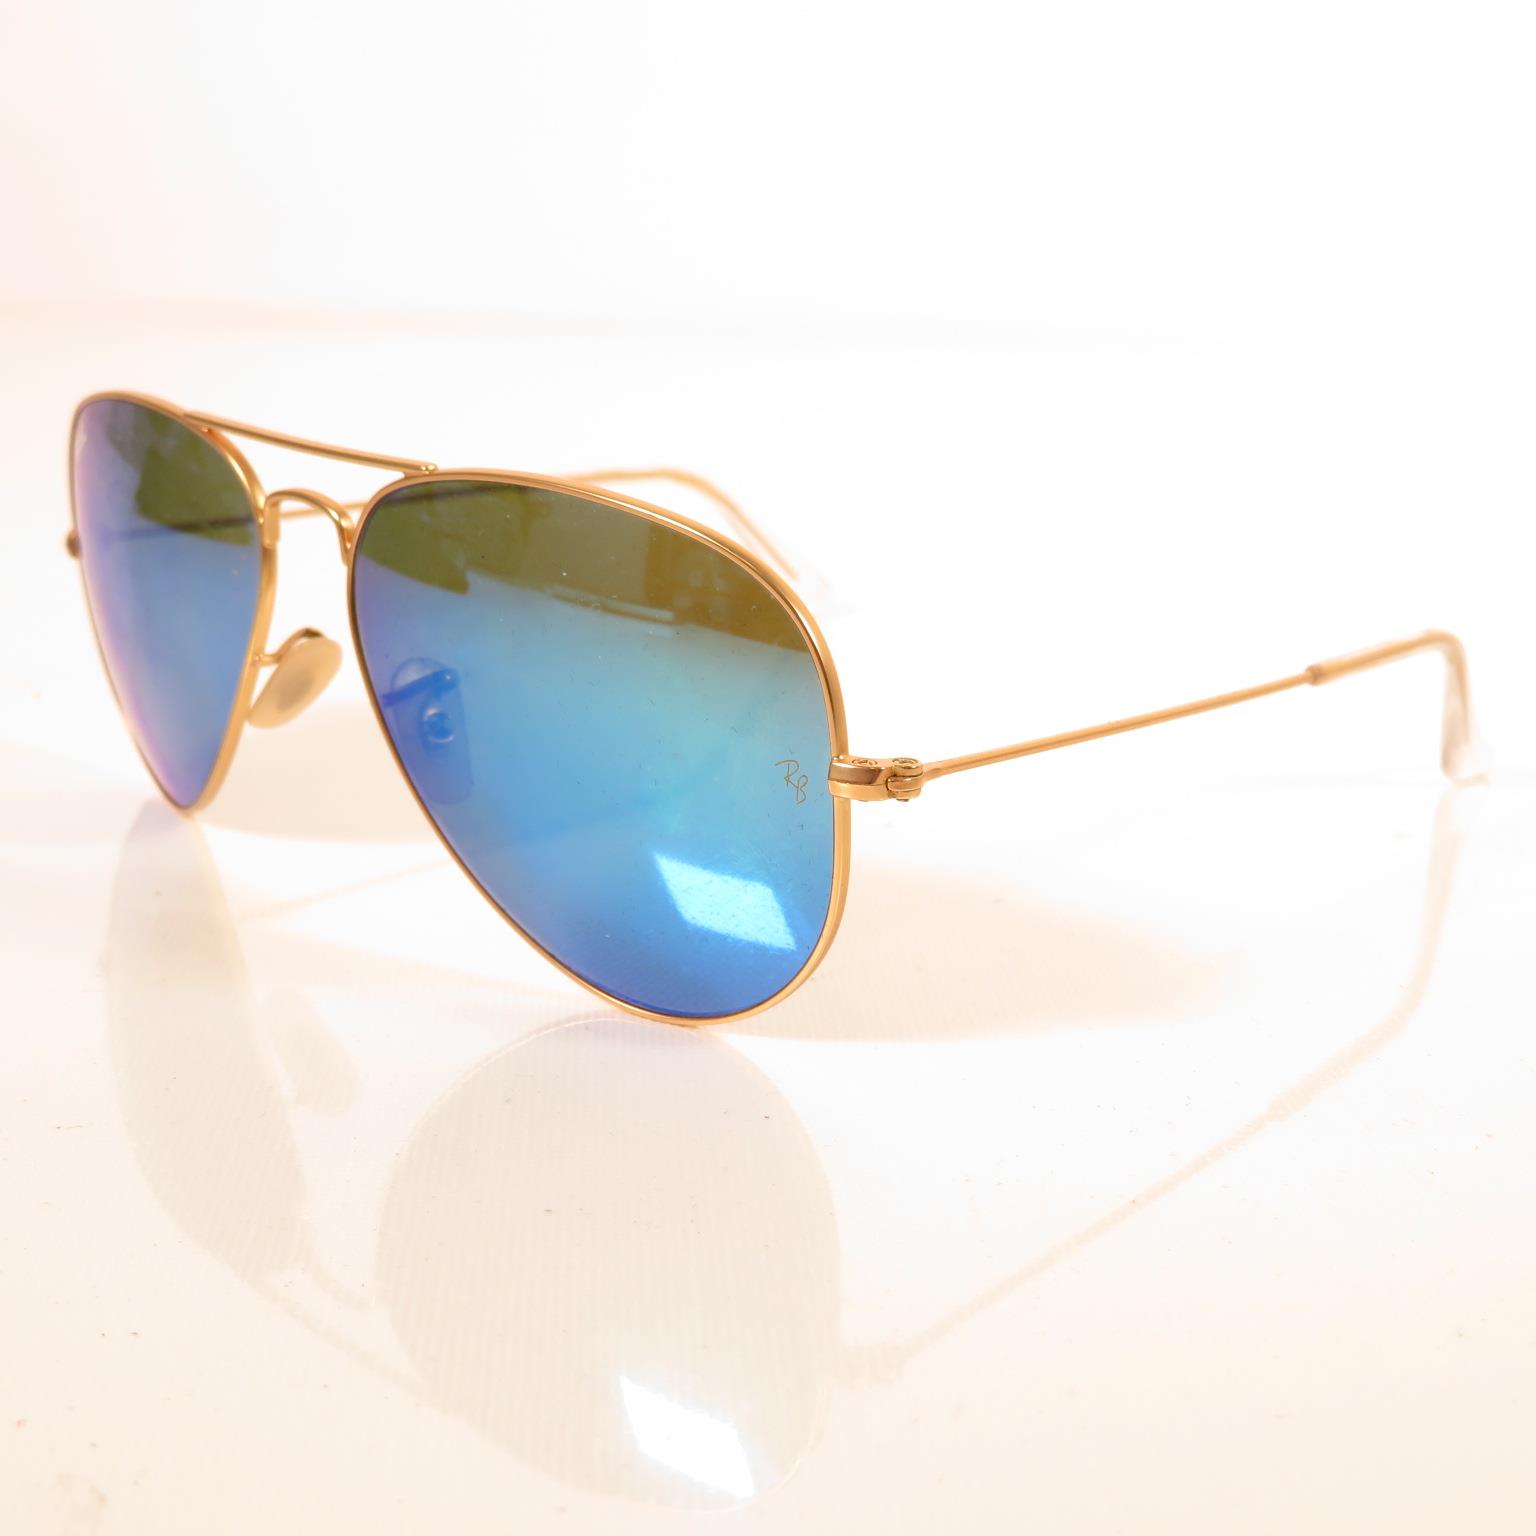 5x pairs Ray Ban sunglasses - - Image 17 of 23